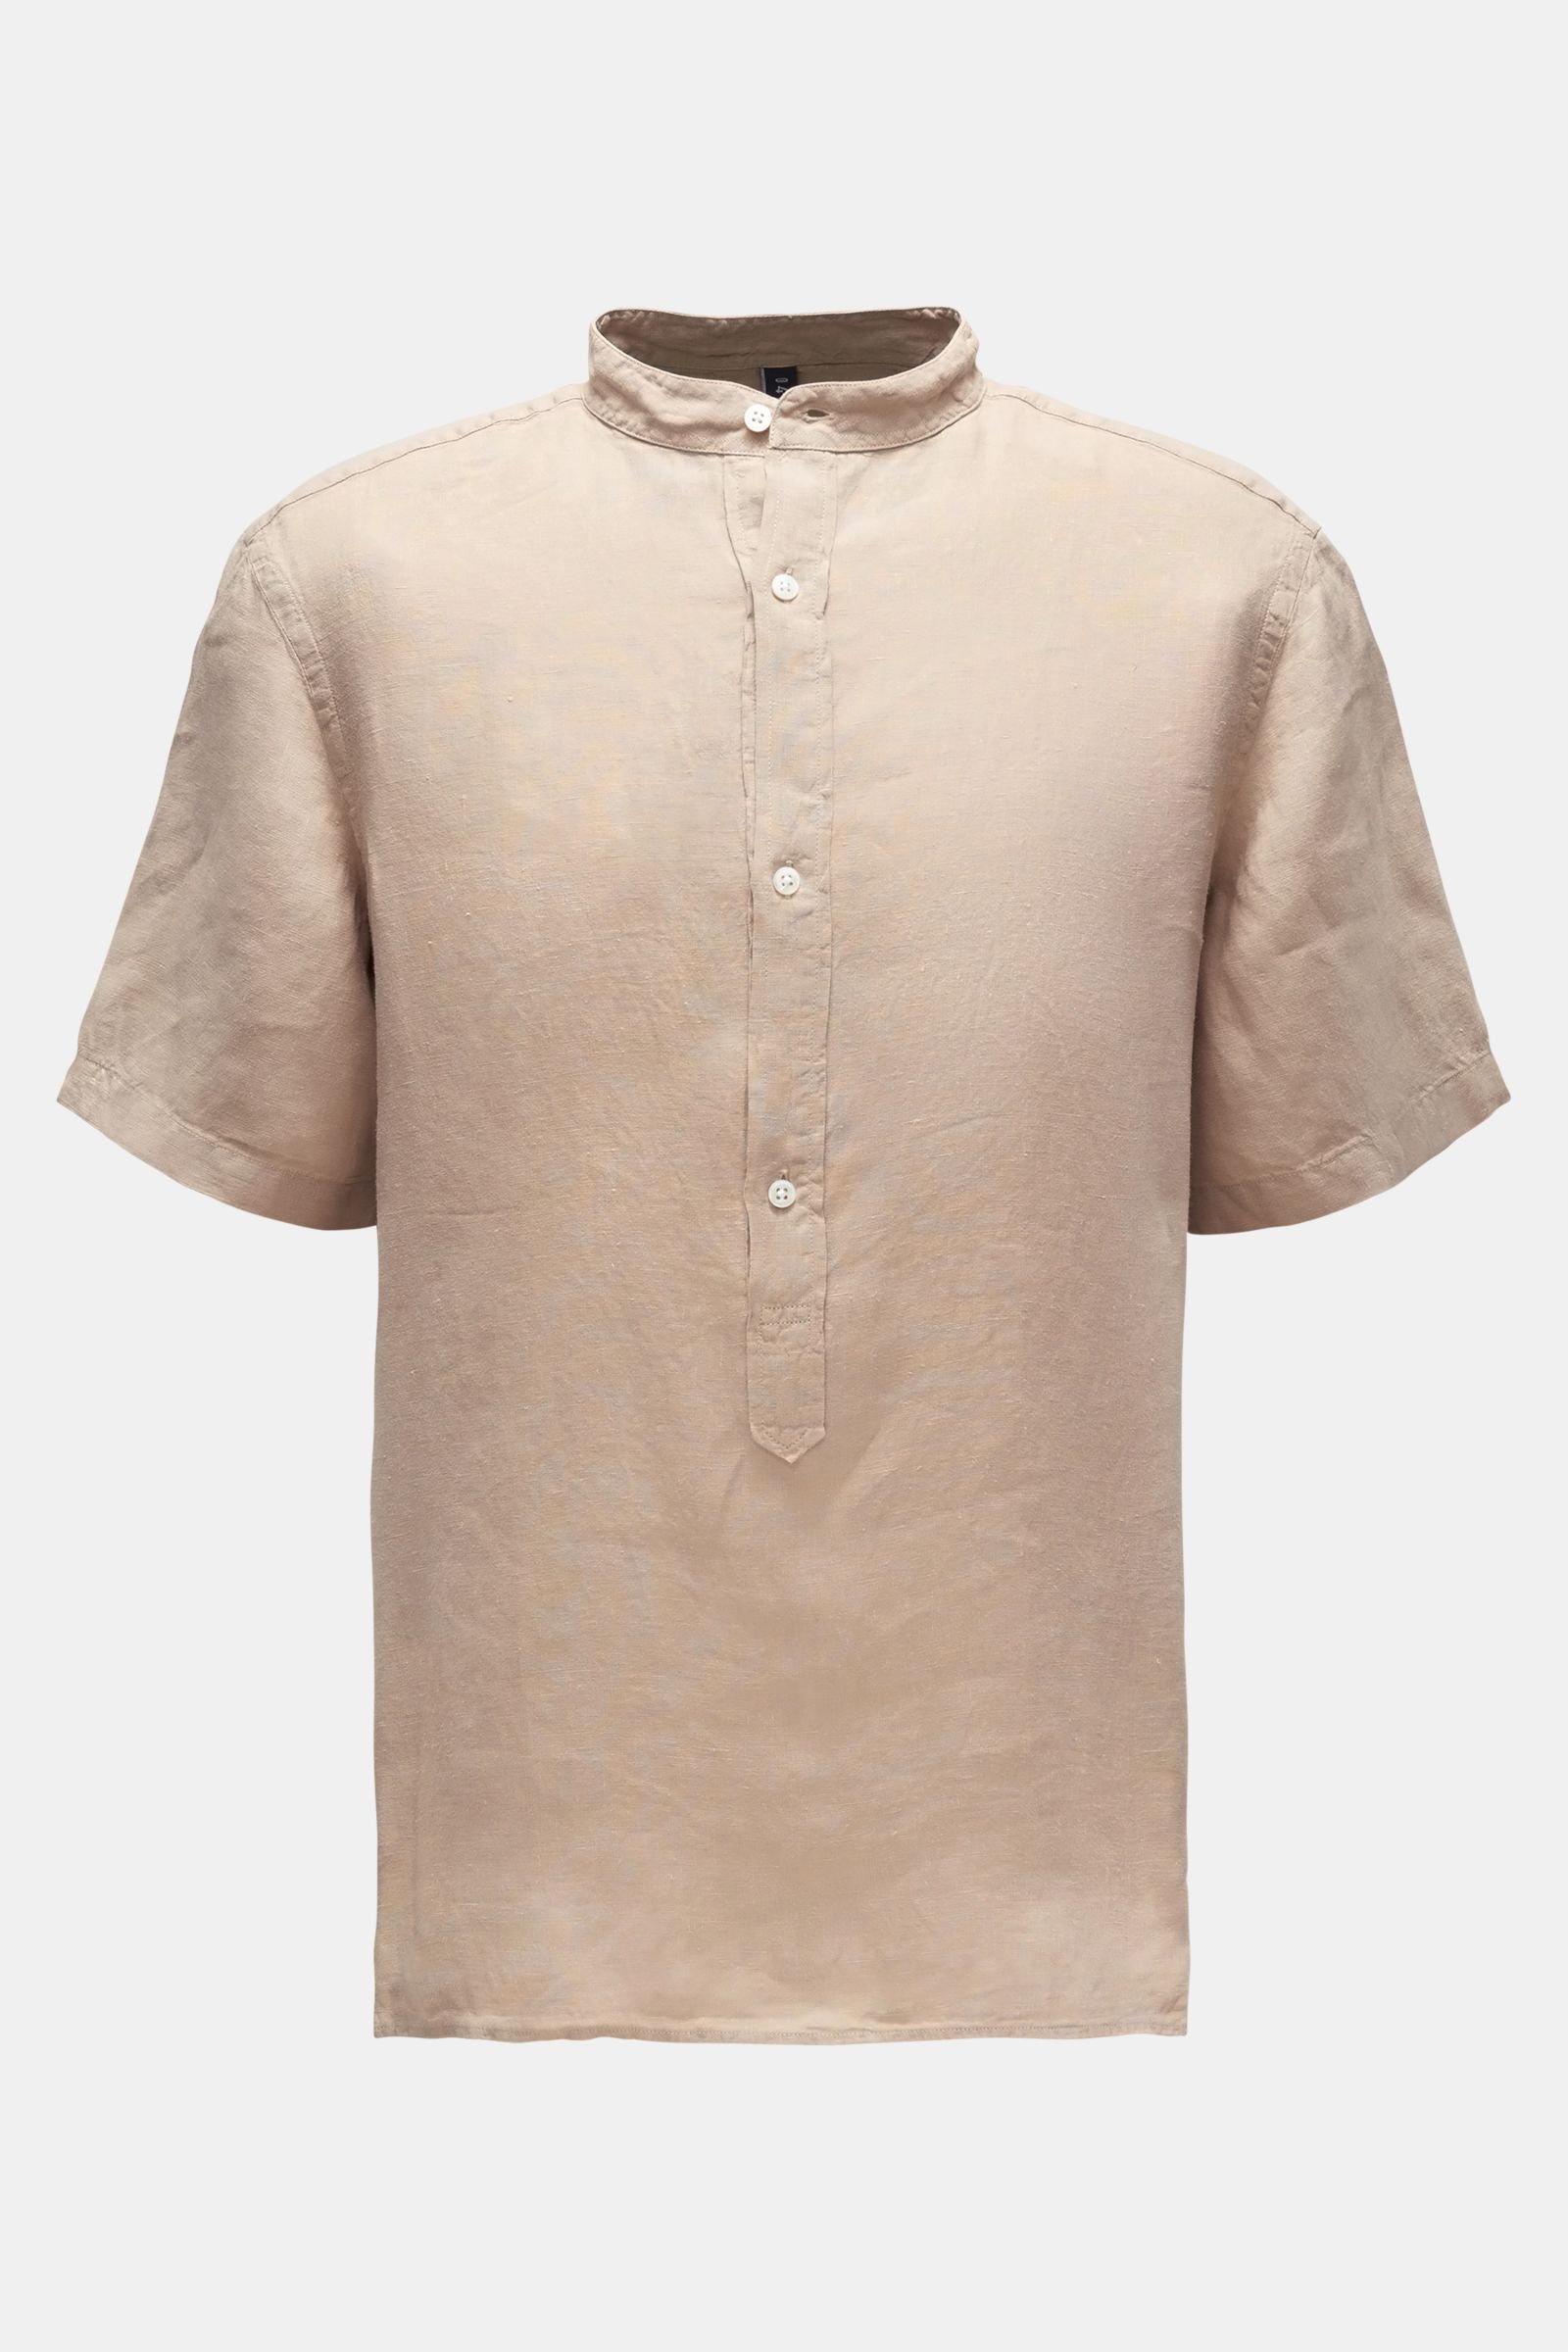 Popover short sleeve shirt 'Linen Guru' grandad collar beige